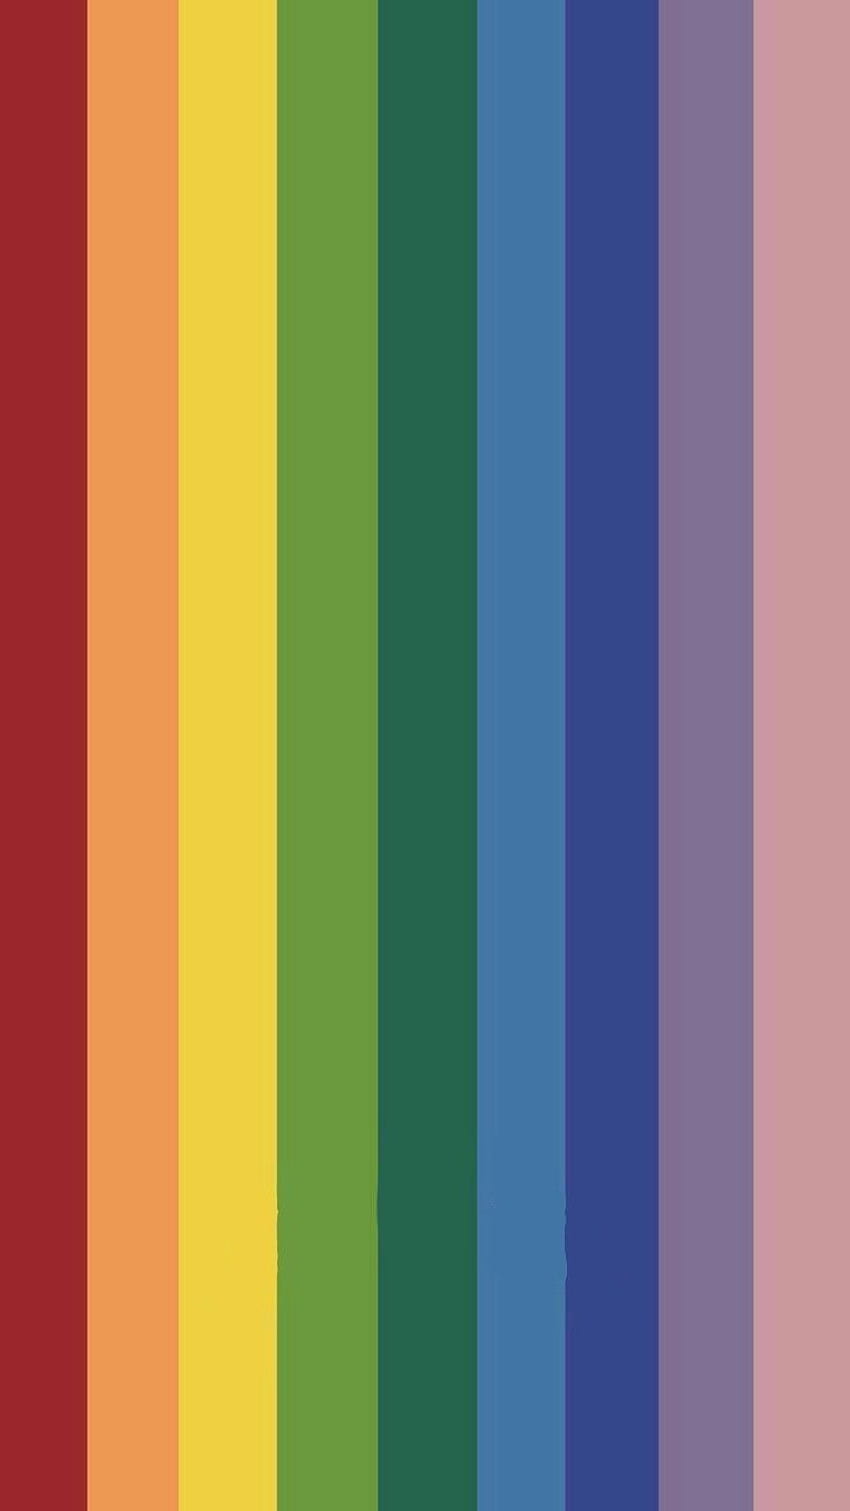 Retro Rainbow Wallpaper  Image and vector  Gooova Studio